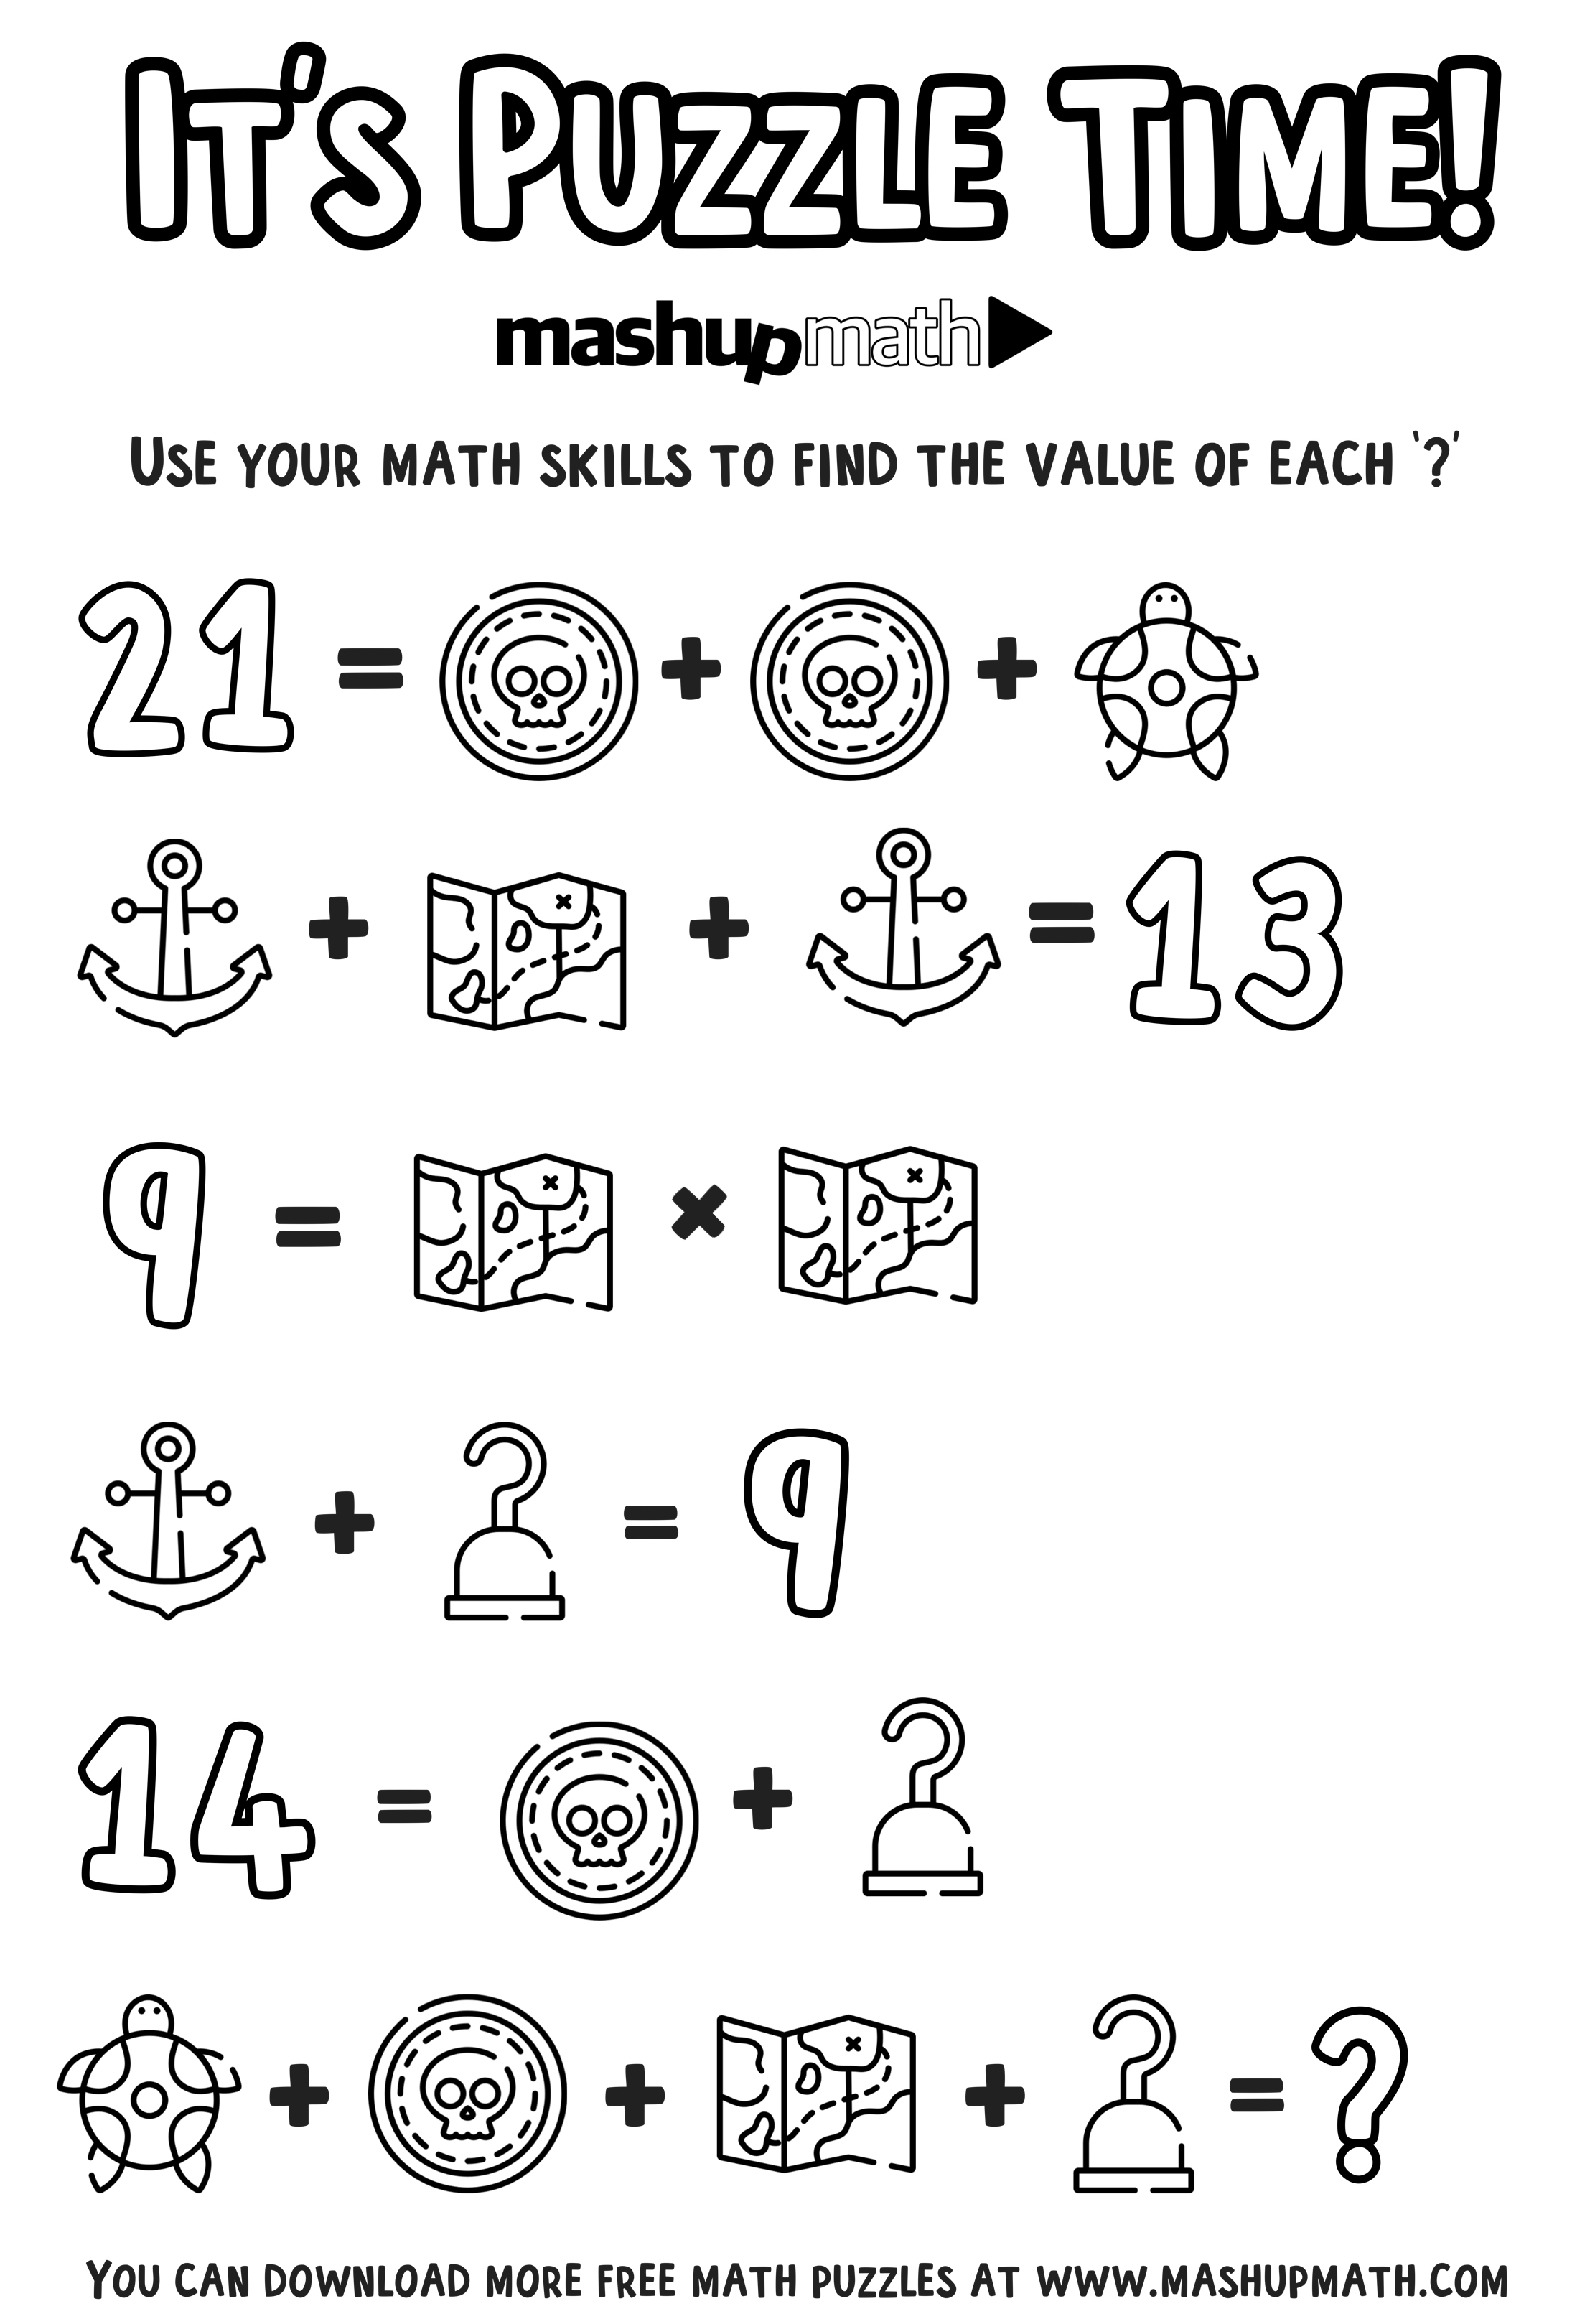 free math coloring worksheets for 5th and 6th grade mashup math